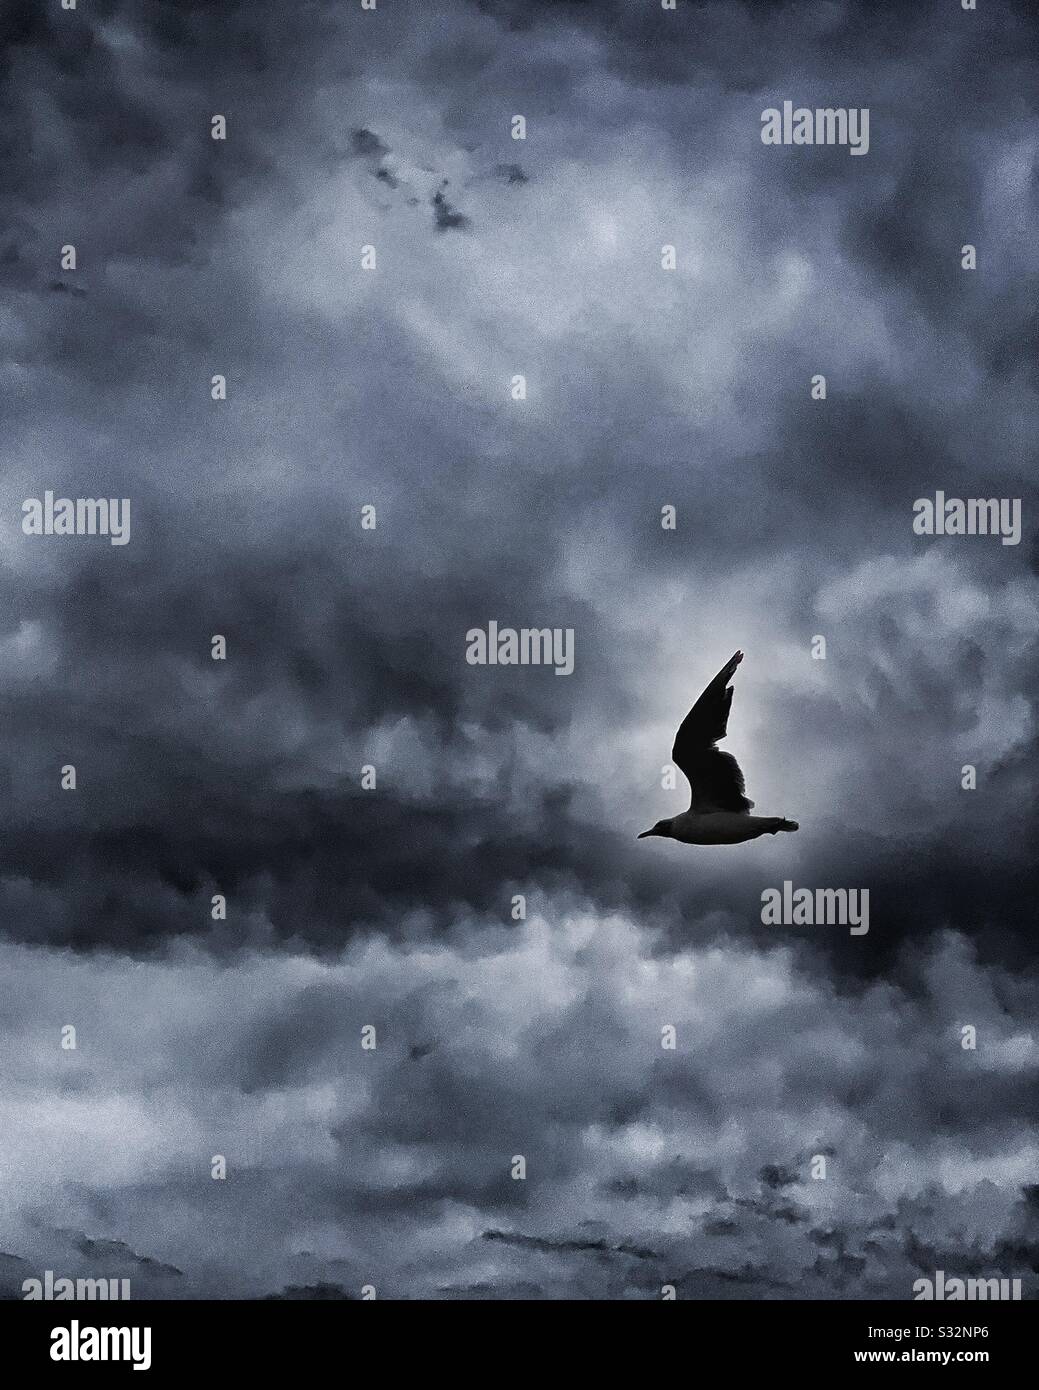 Silhouette of bird flying across the dark cloudy stormy sky Stock Photo